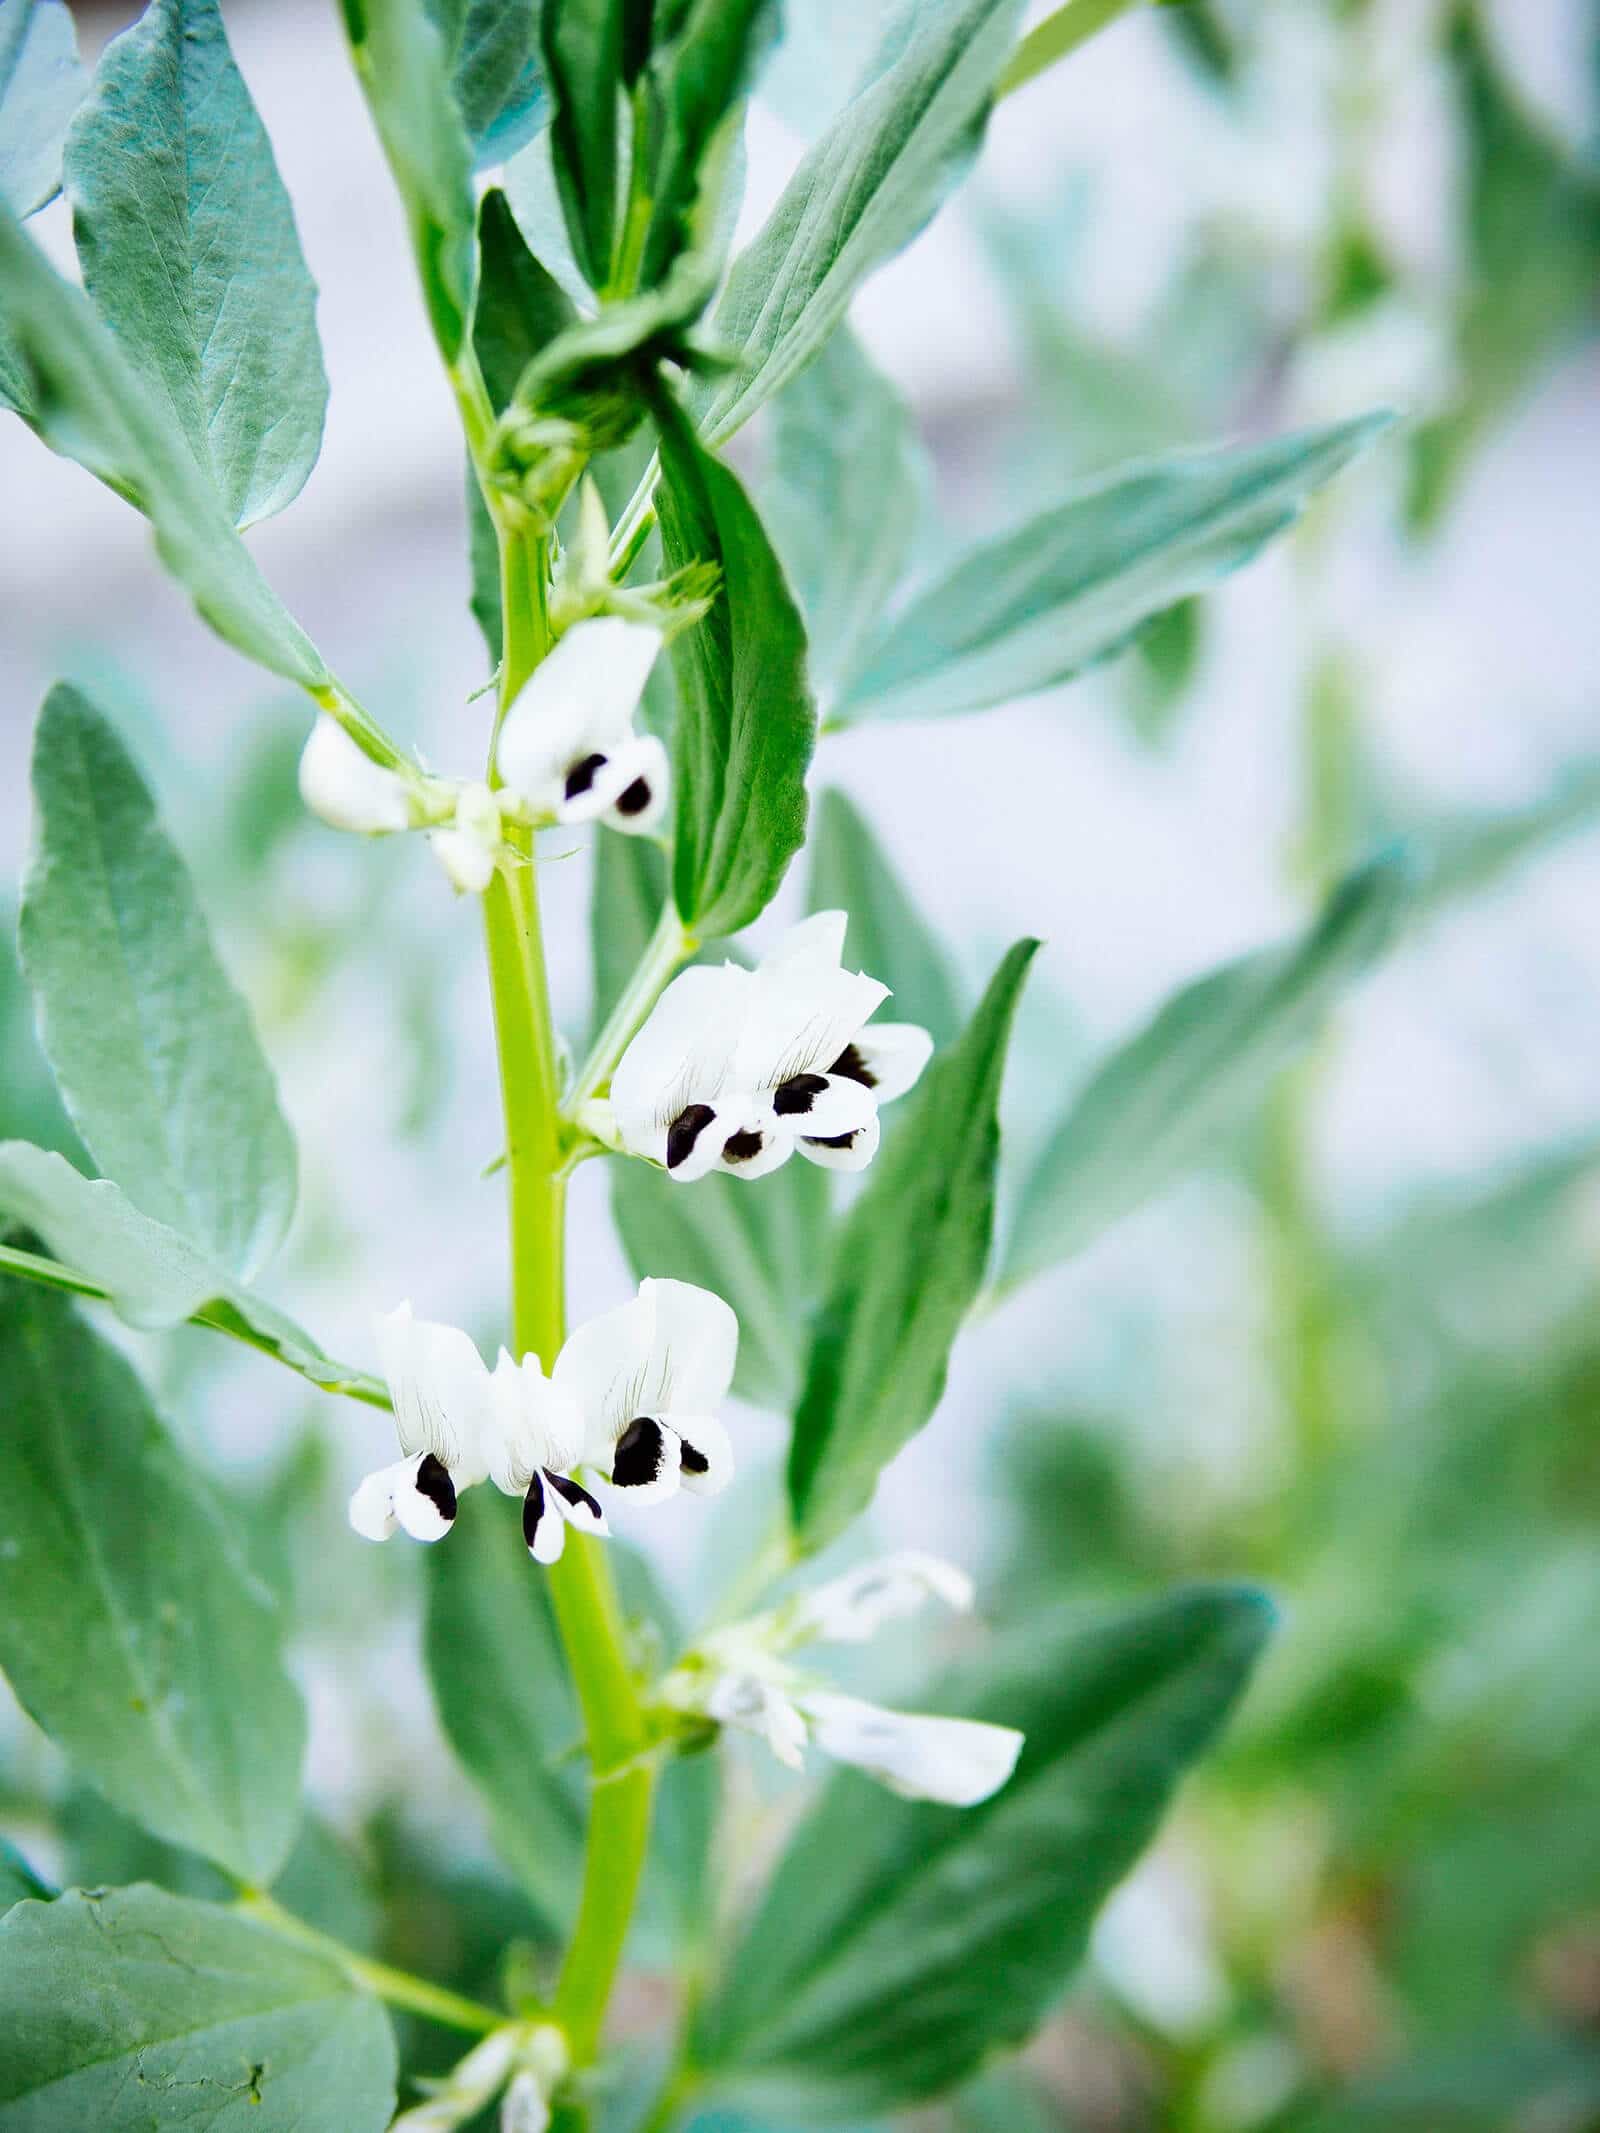 Fava bean stem with fava flowers